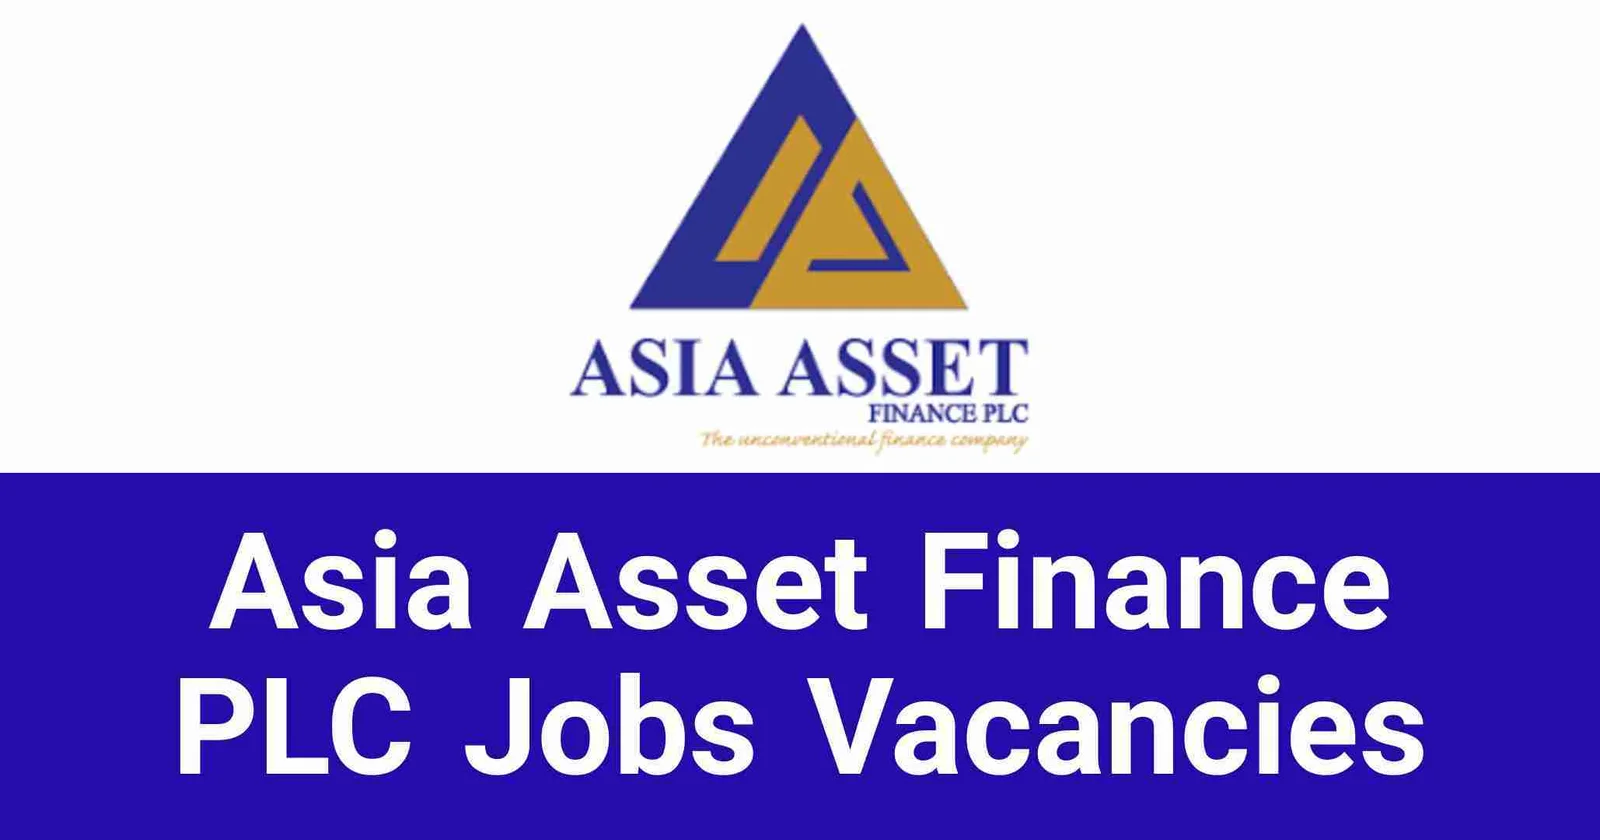 Asia Asset Finance PLC Jobs Vacancies